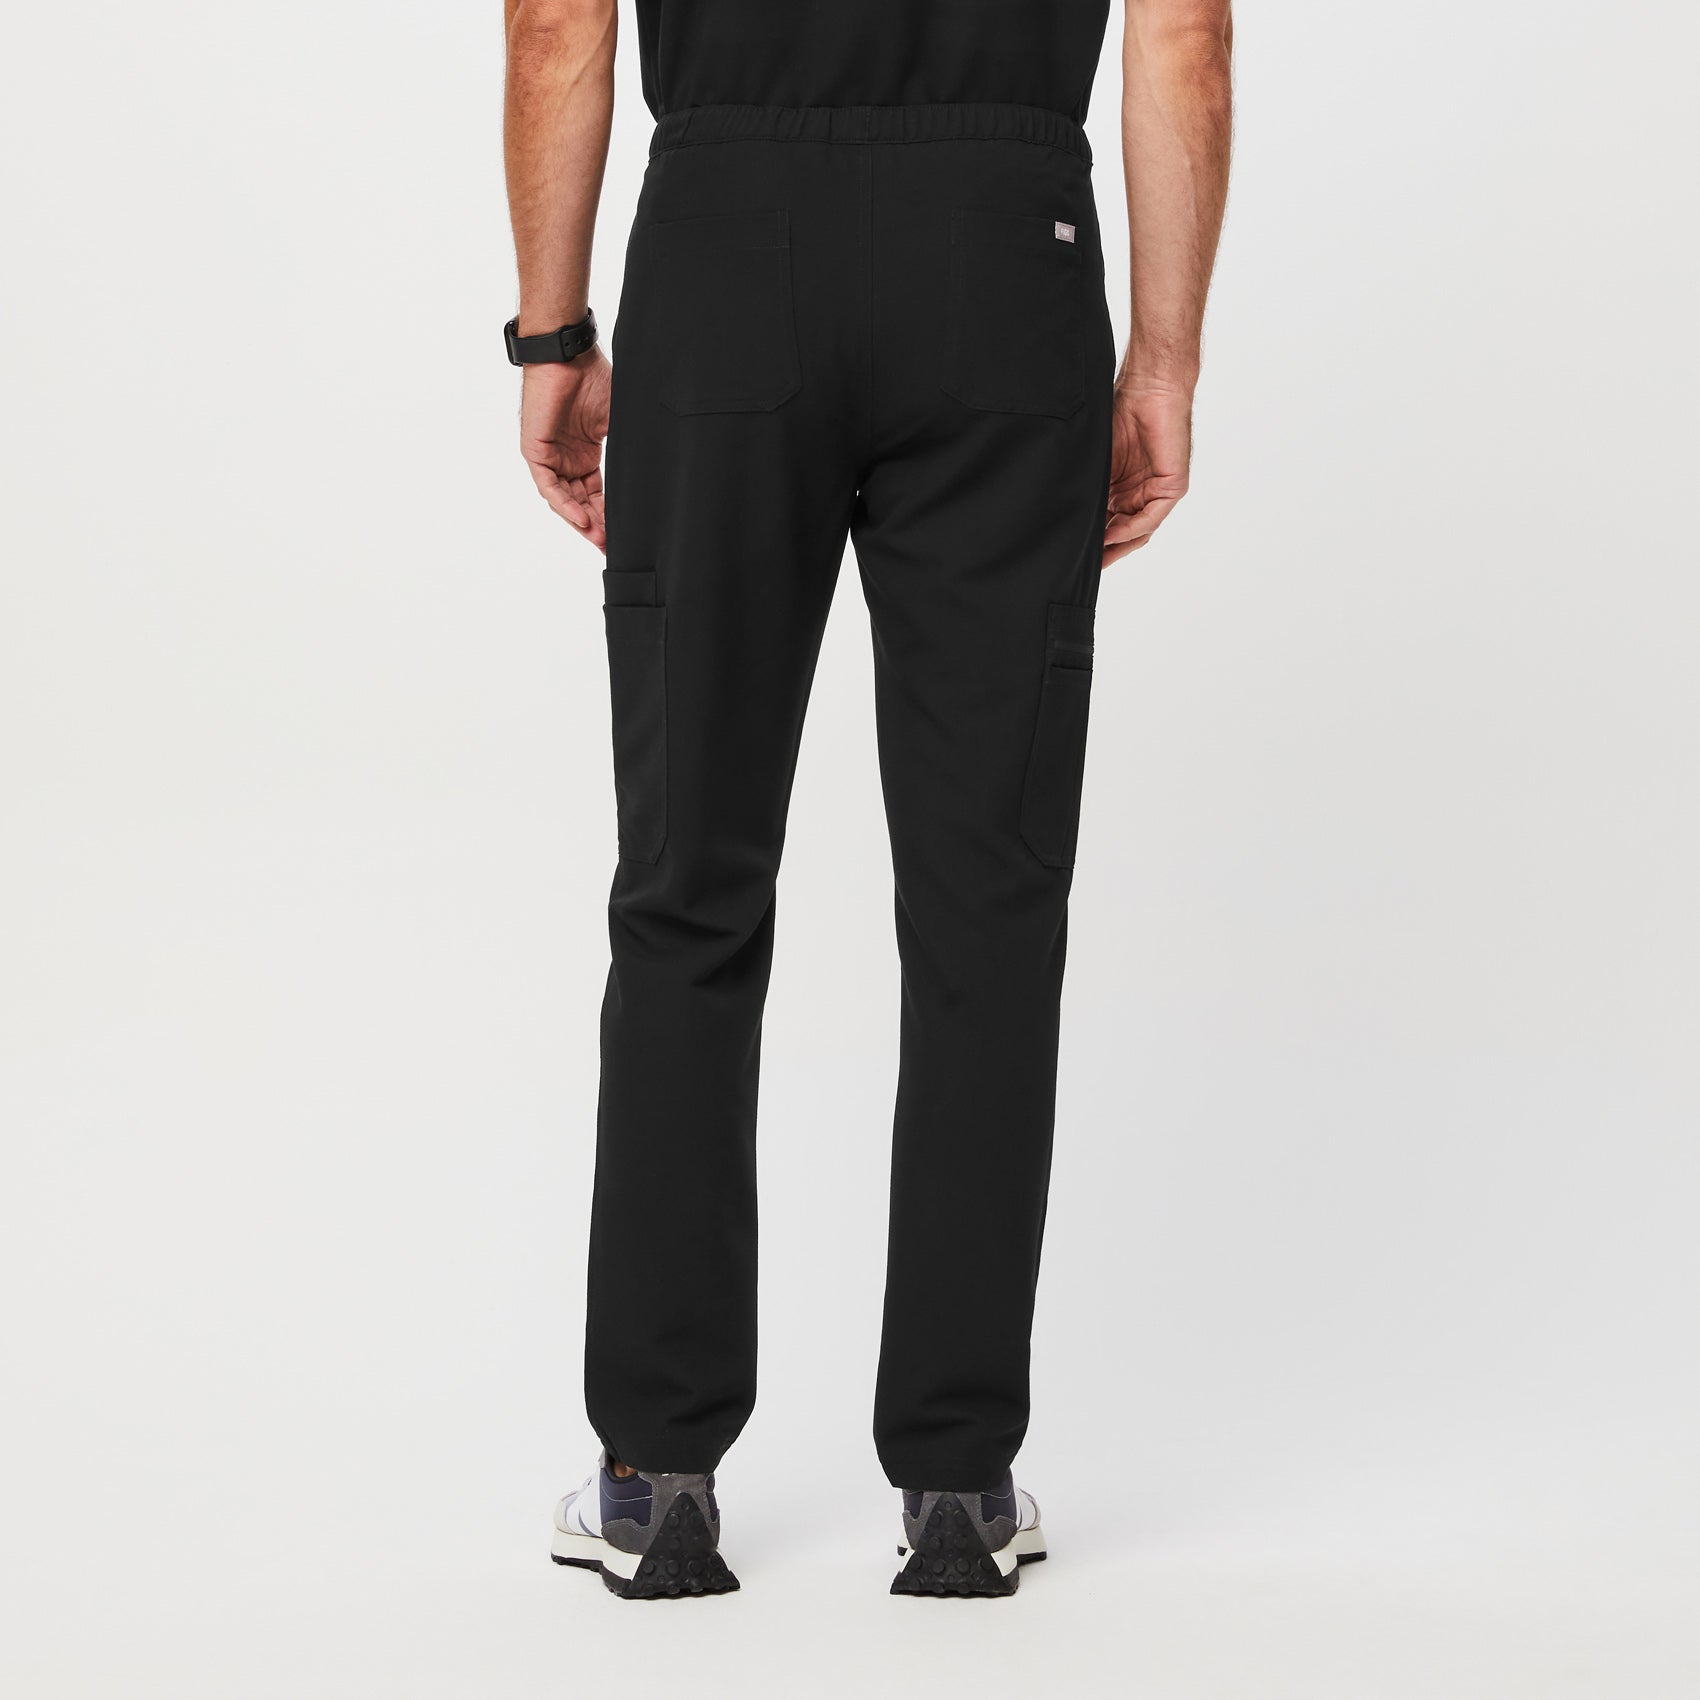 Figs Axim Cargo Scrub Pants (XL on Tag), Men's Fashion, Bottoms